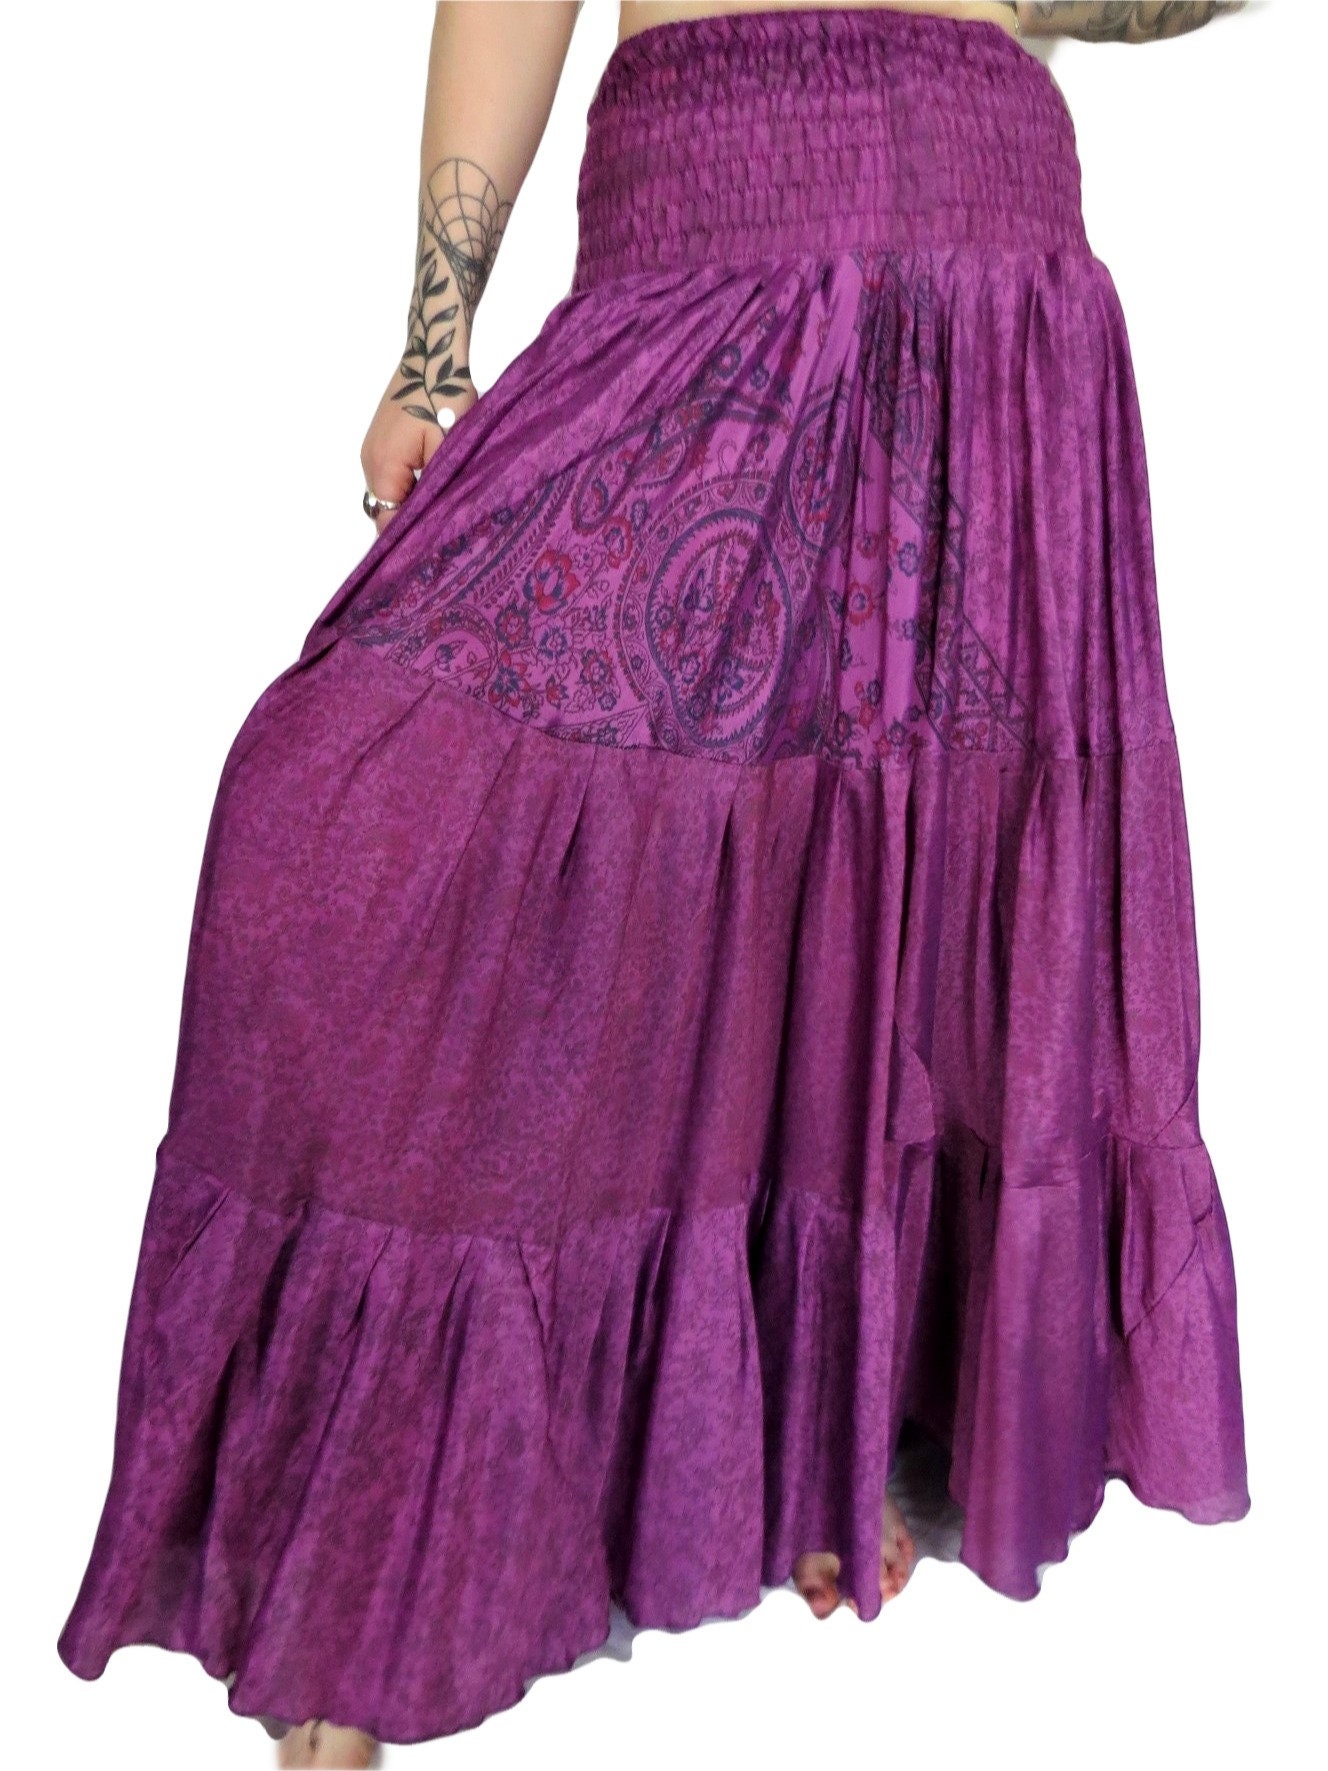 Fairtrade Women's Recycled Sari Full Gypsy Skirt SK151 - Etsy